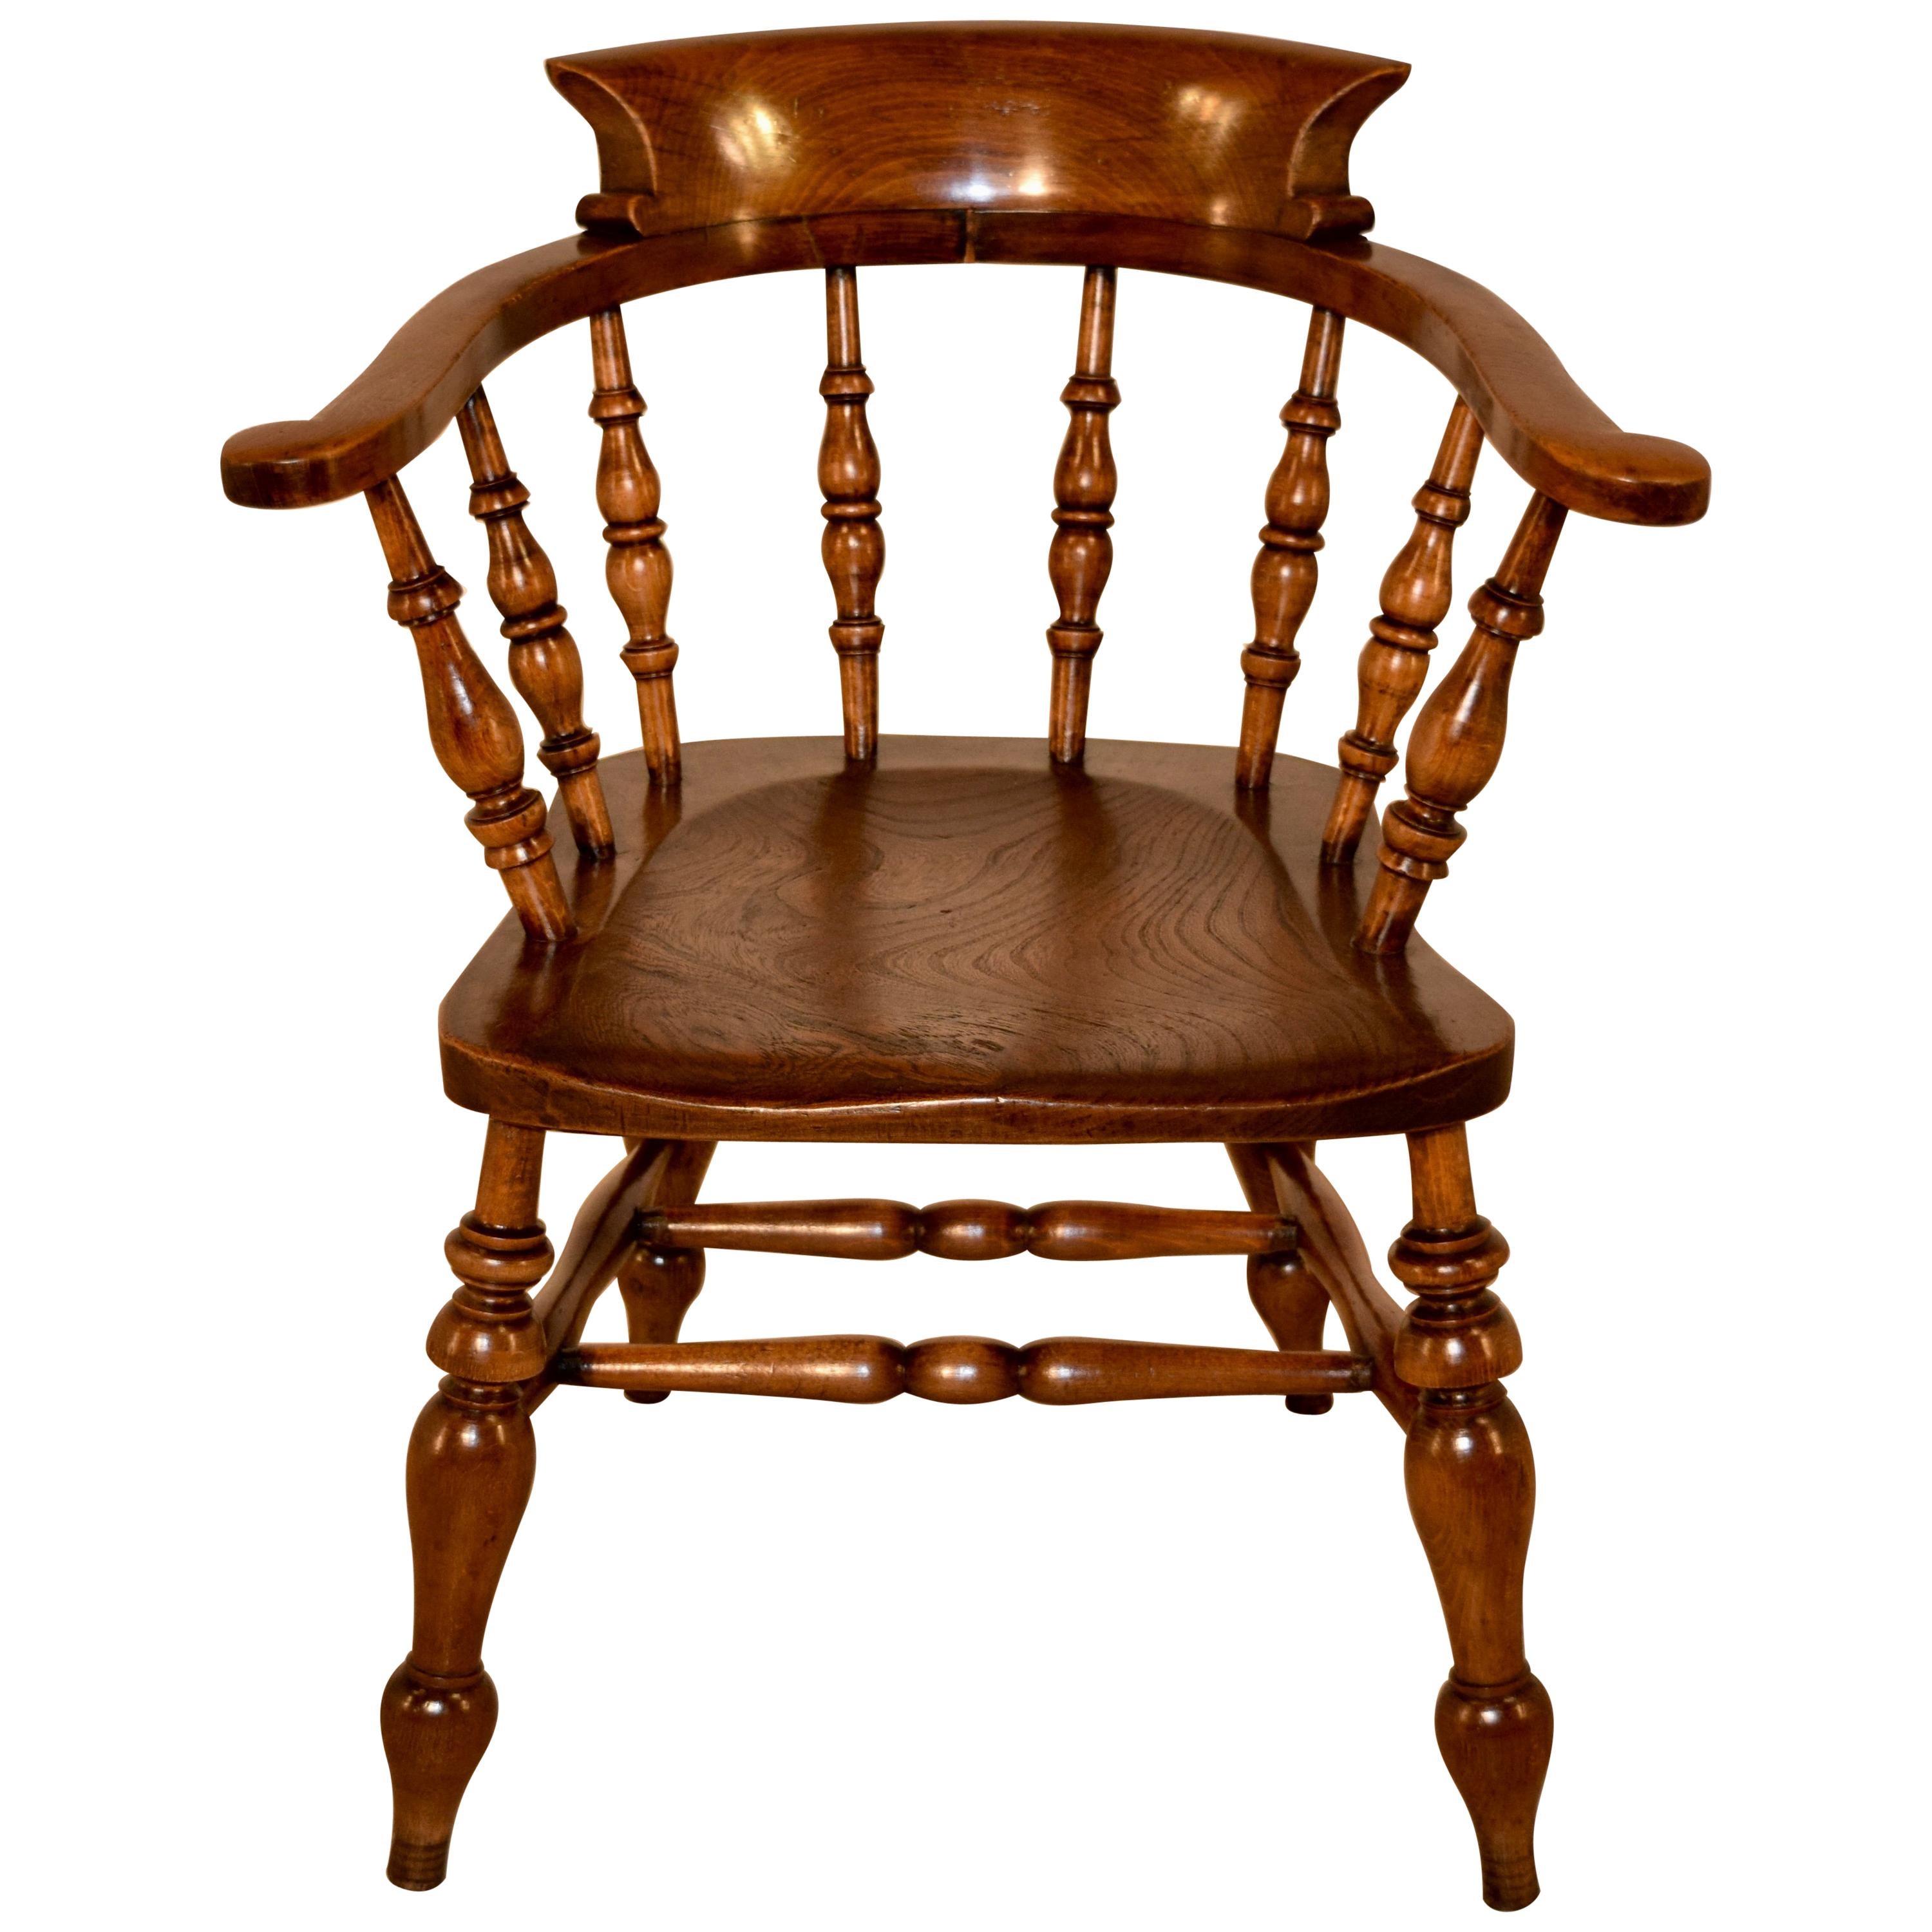 19th Century English Captain's Chair